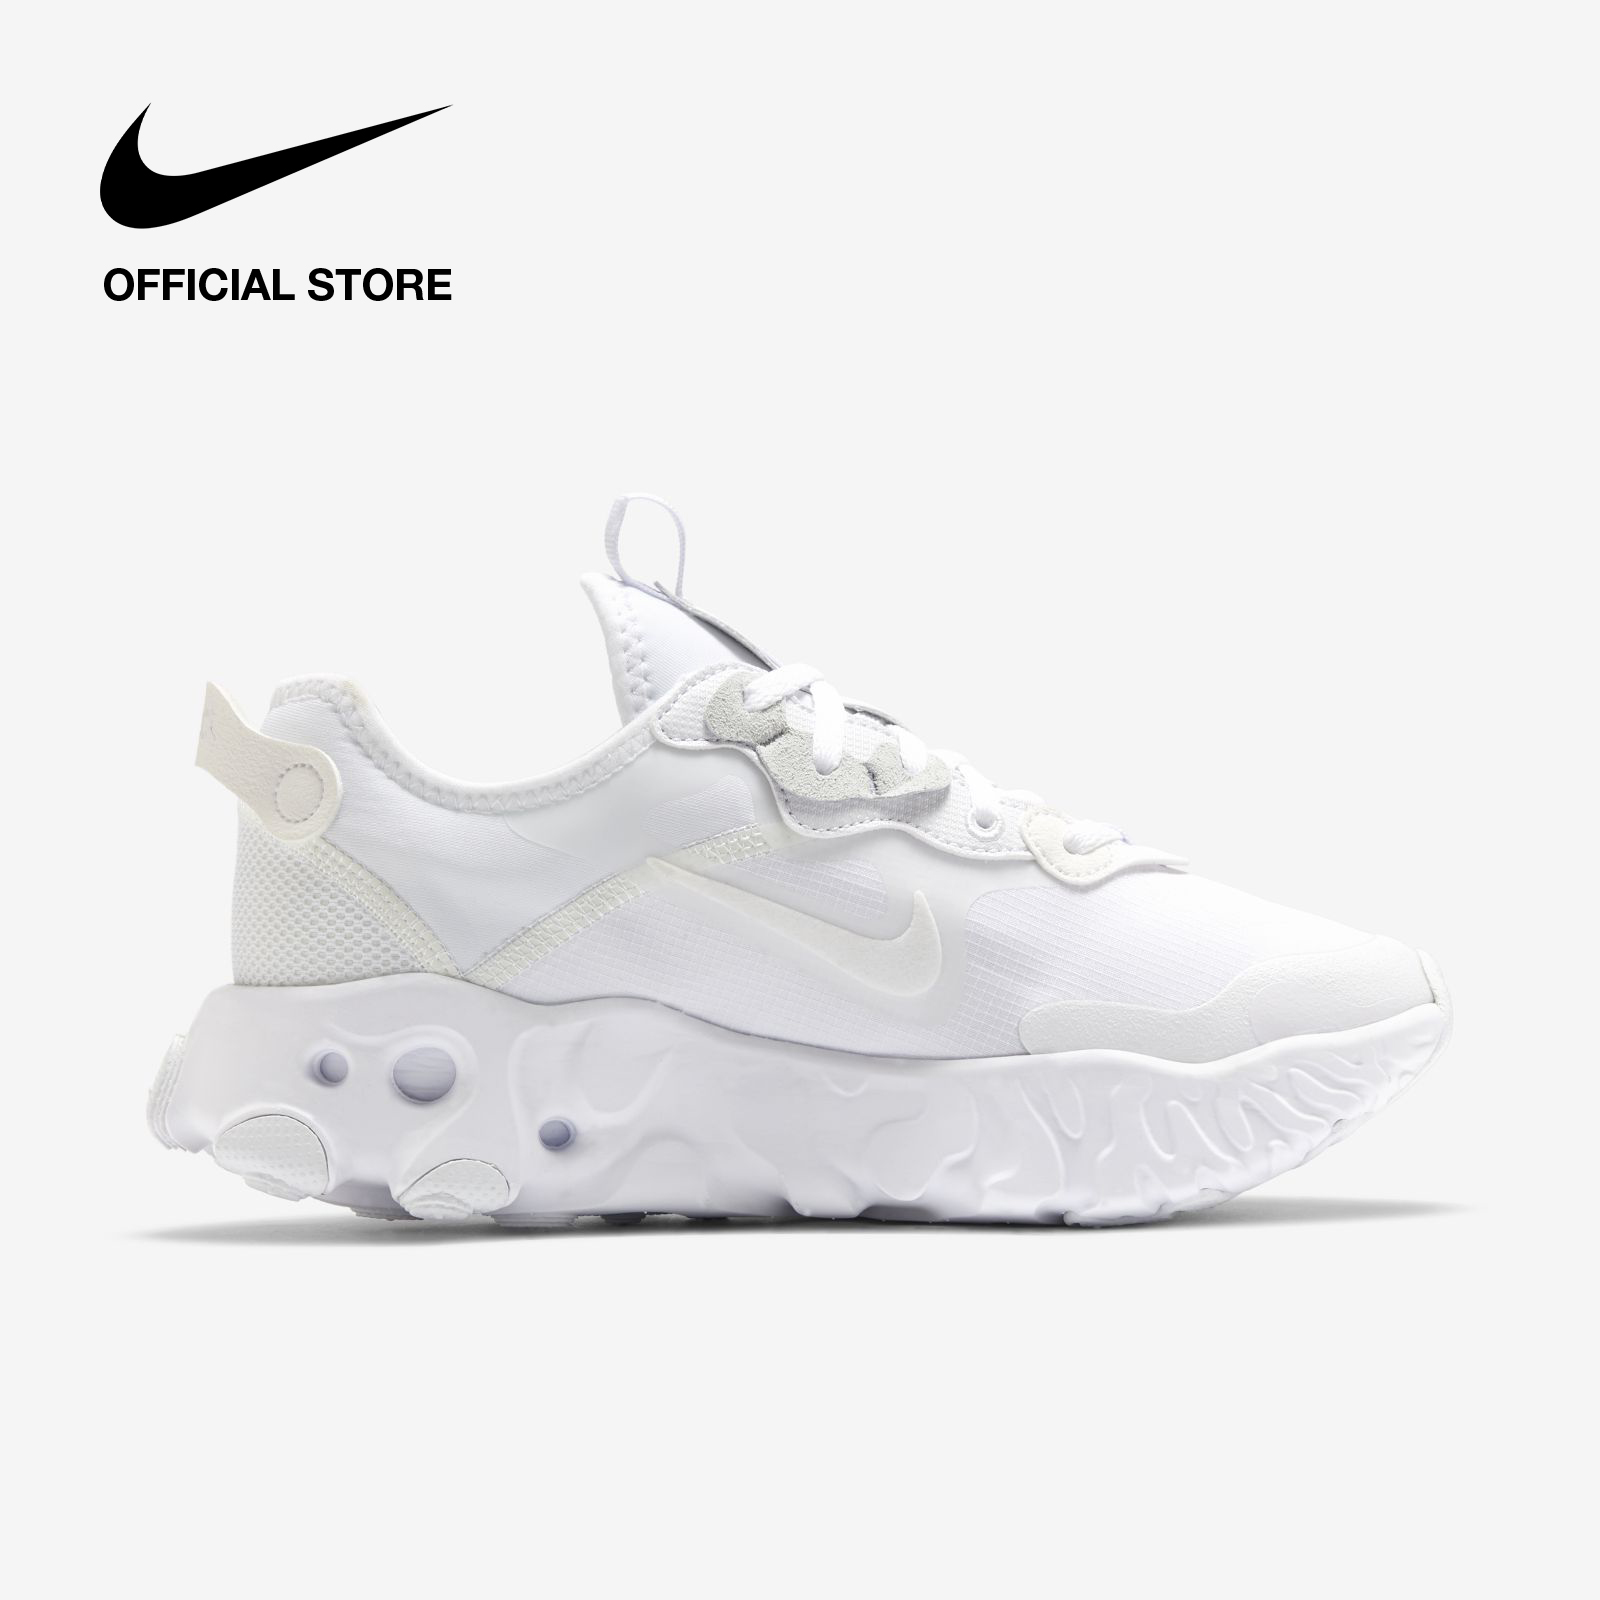 Nike Women's React Art3mis Shoes - White รองเท้าผู้หญิง Nike React Art3mis - สีขาว